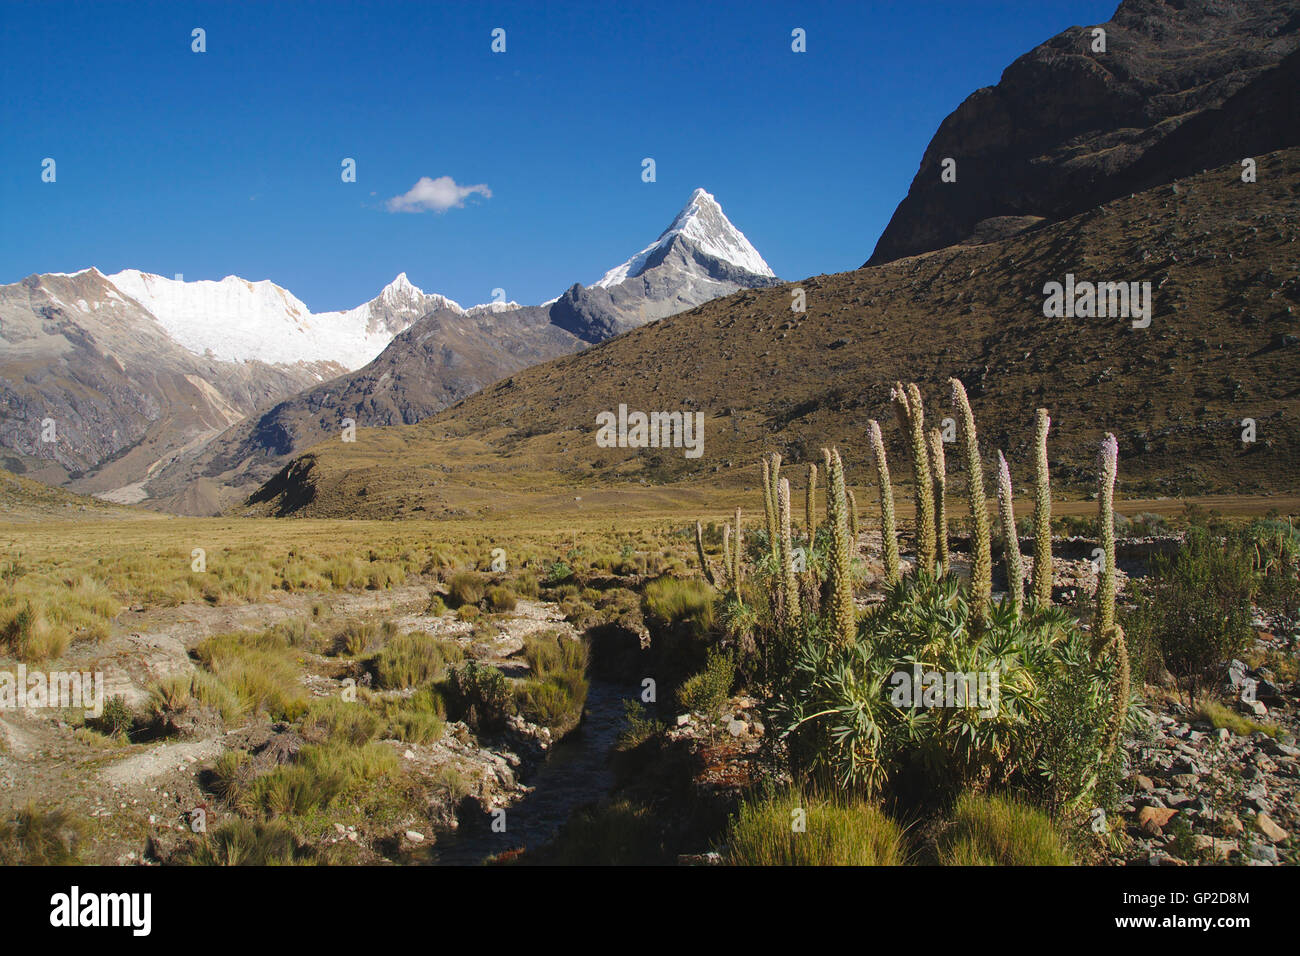 Artesonraju, view near Alpamayo Base Camp, Cordillera Blanca, Peru Stock Photo